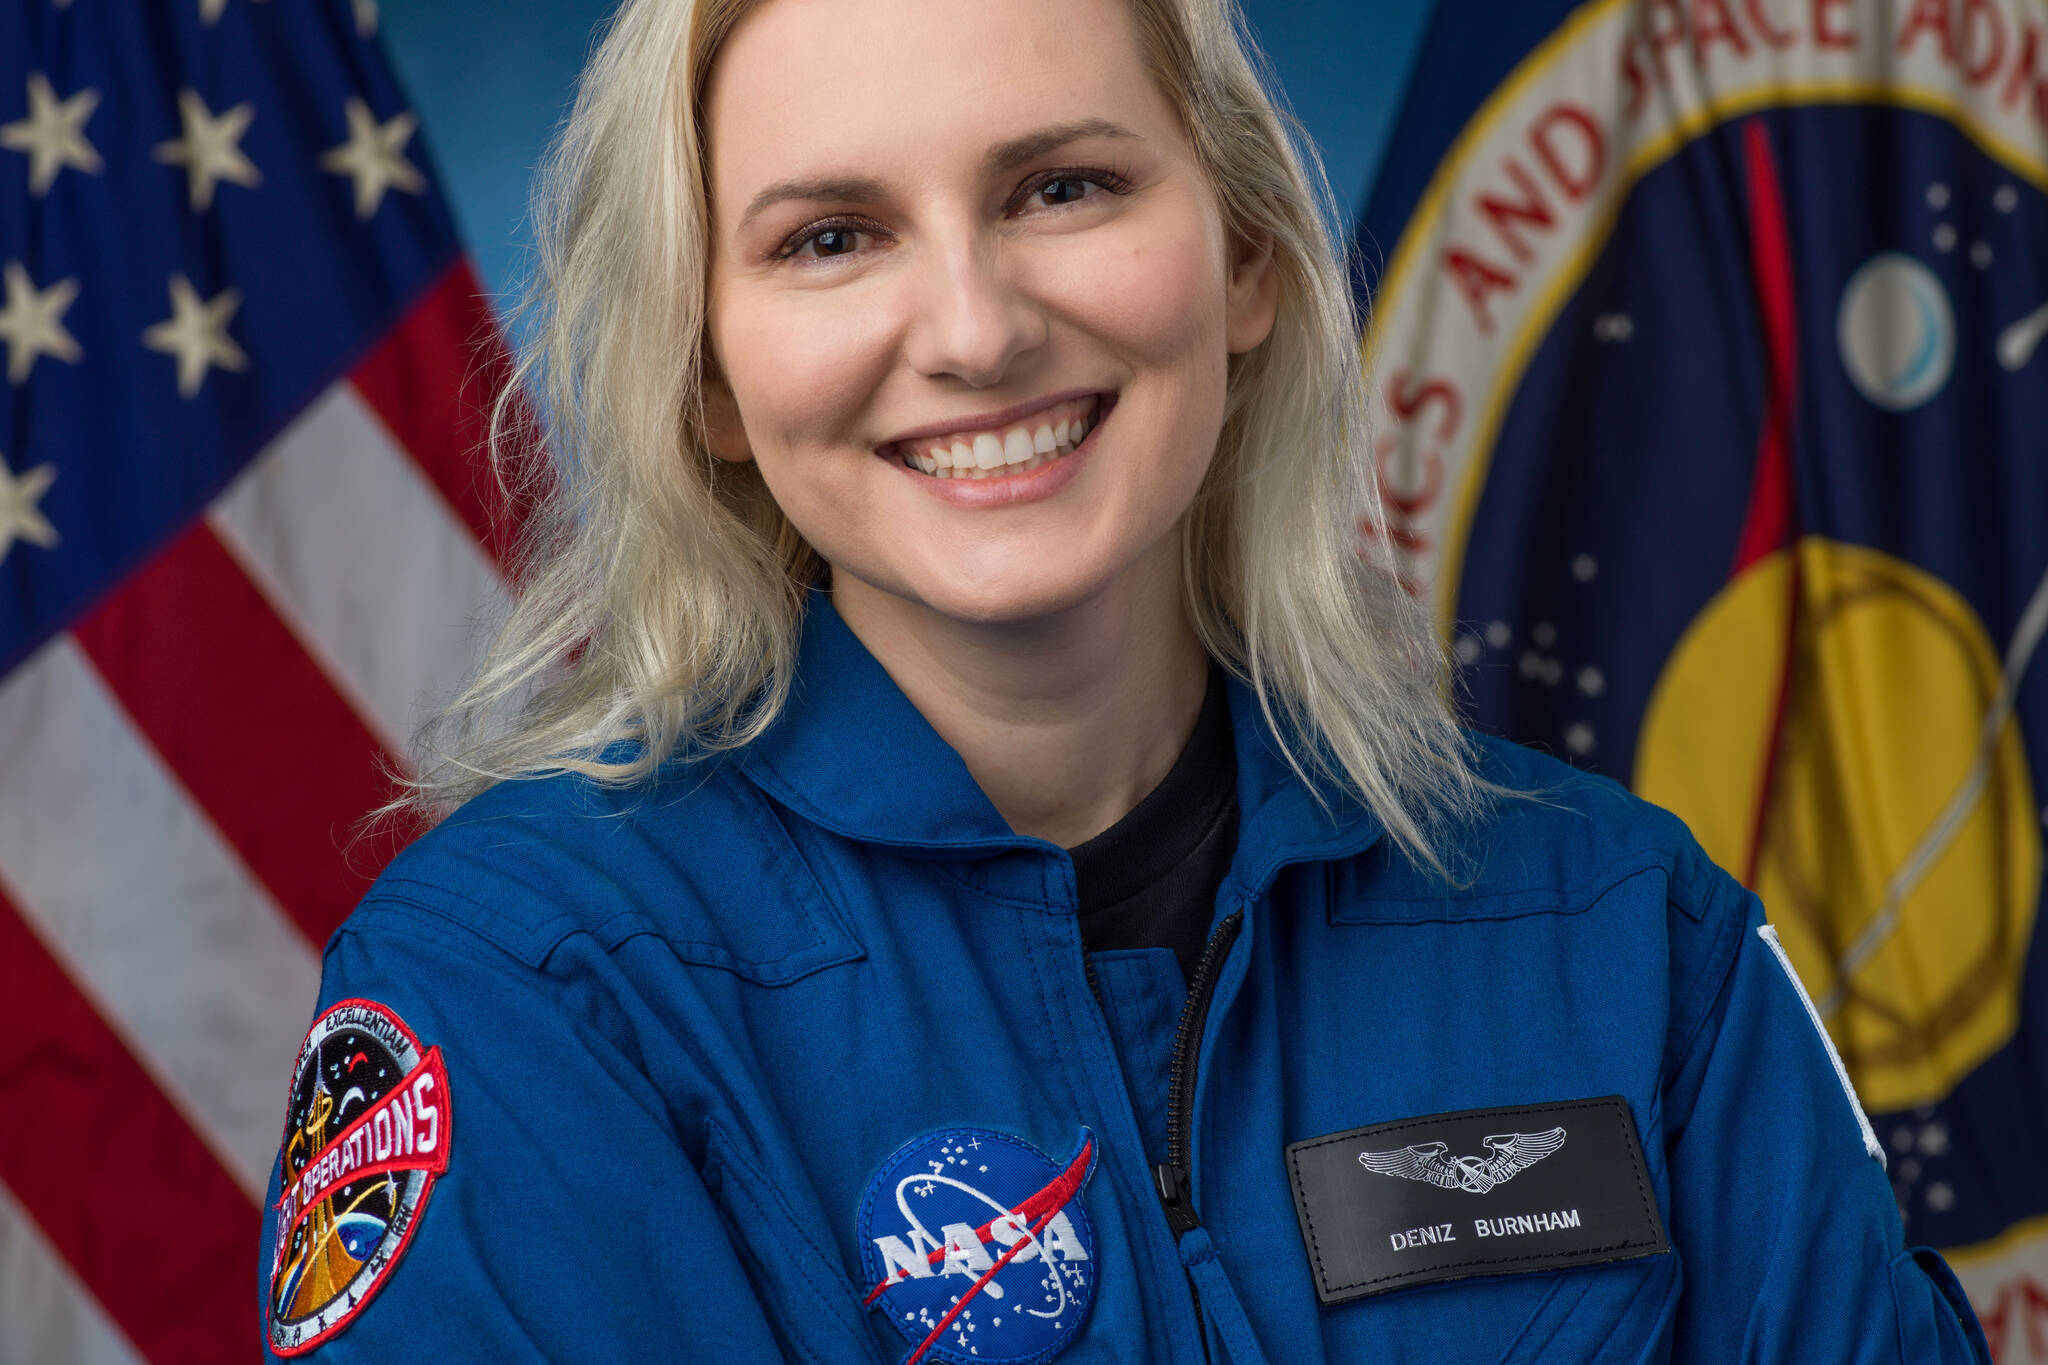 Astronaut Candidate Deniz Burnham, of ASCAN Class of 2021, poses for an official photo on Dec. 3, 2021. (Robert Markowitz / NASA)